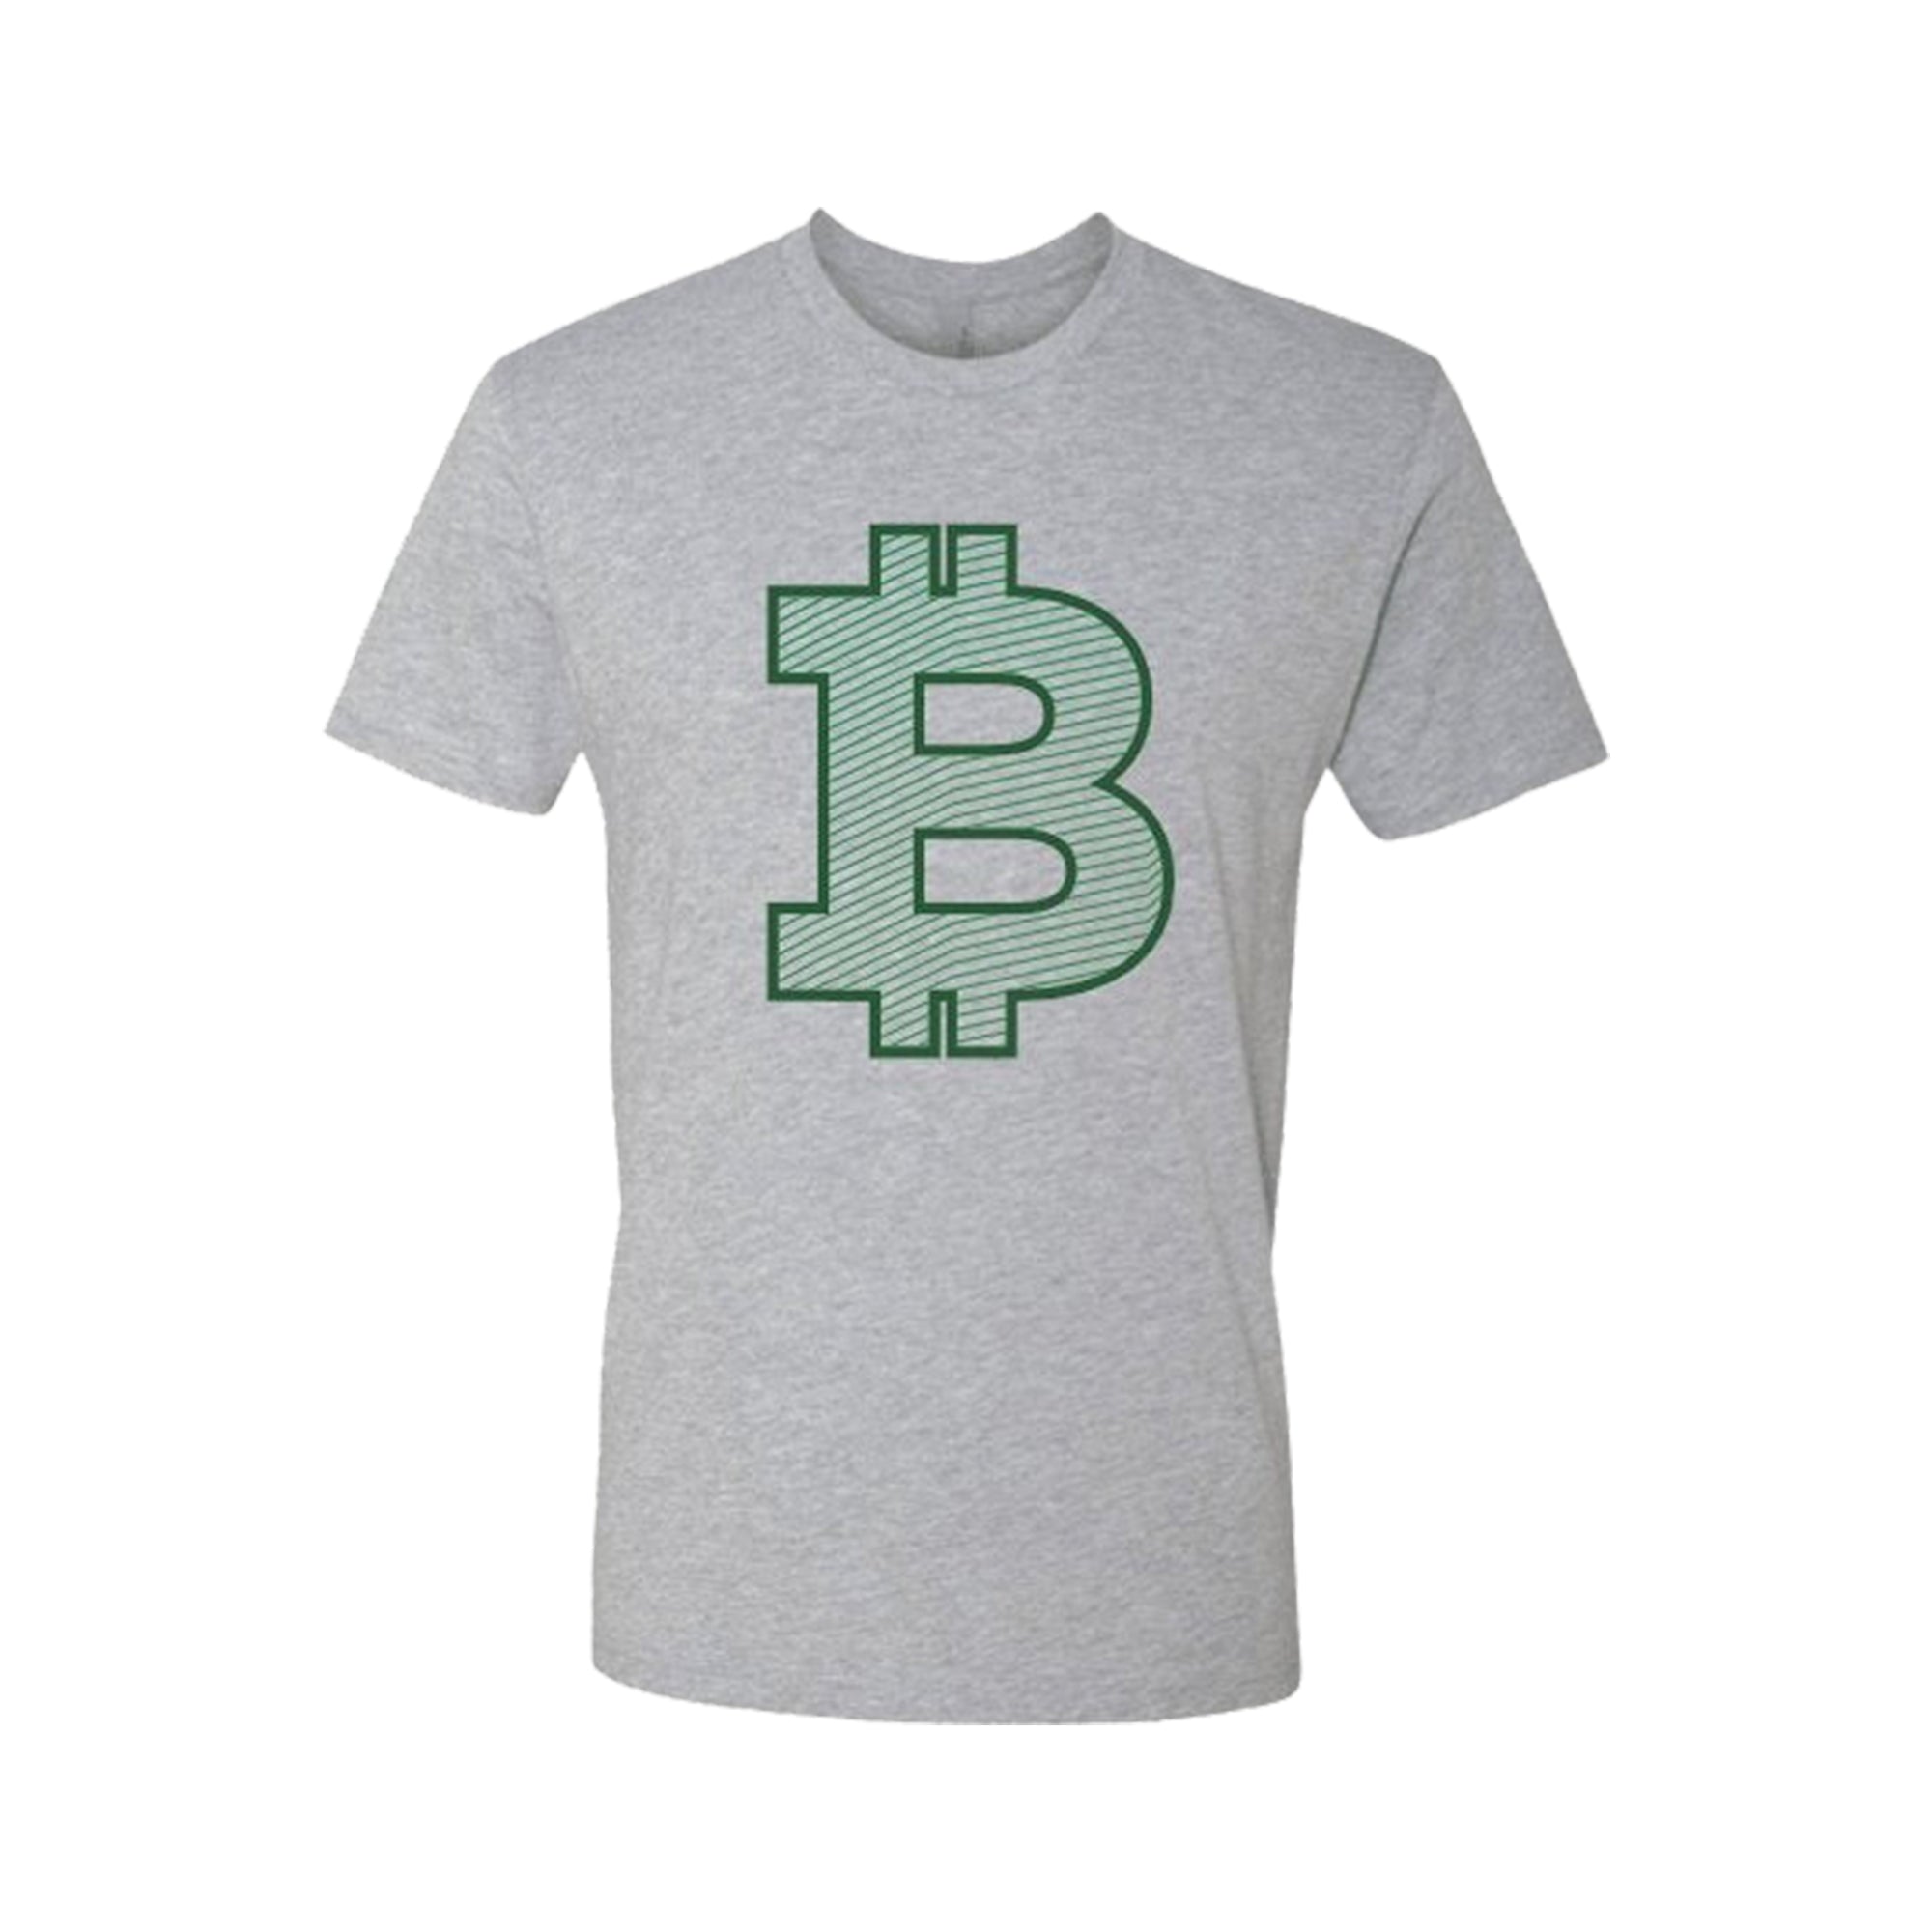 The Heathered Blockchain T-Shirt